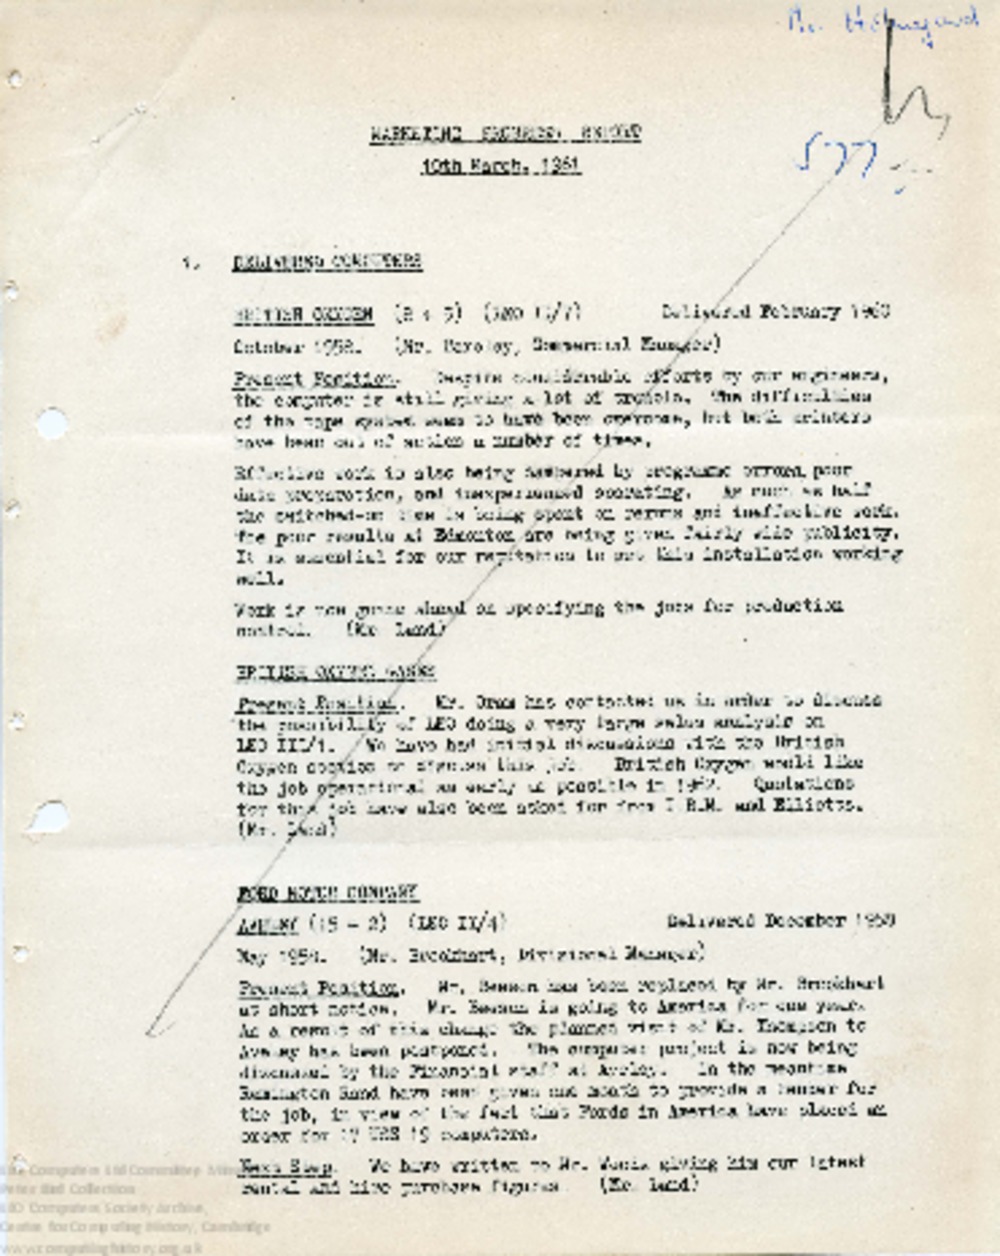 Article: 64497 Marketing Progress Report, 10th Mar 1961